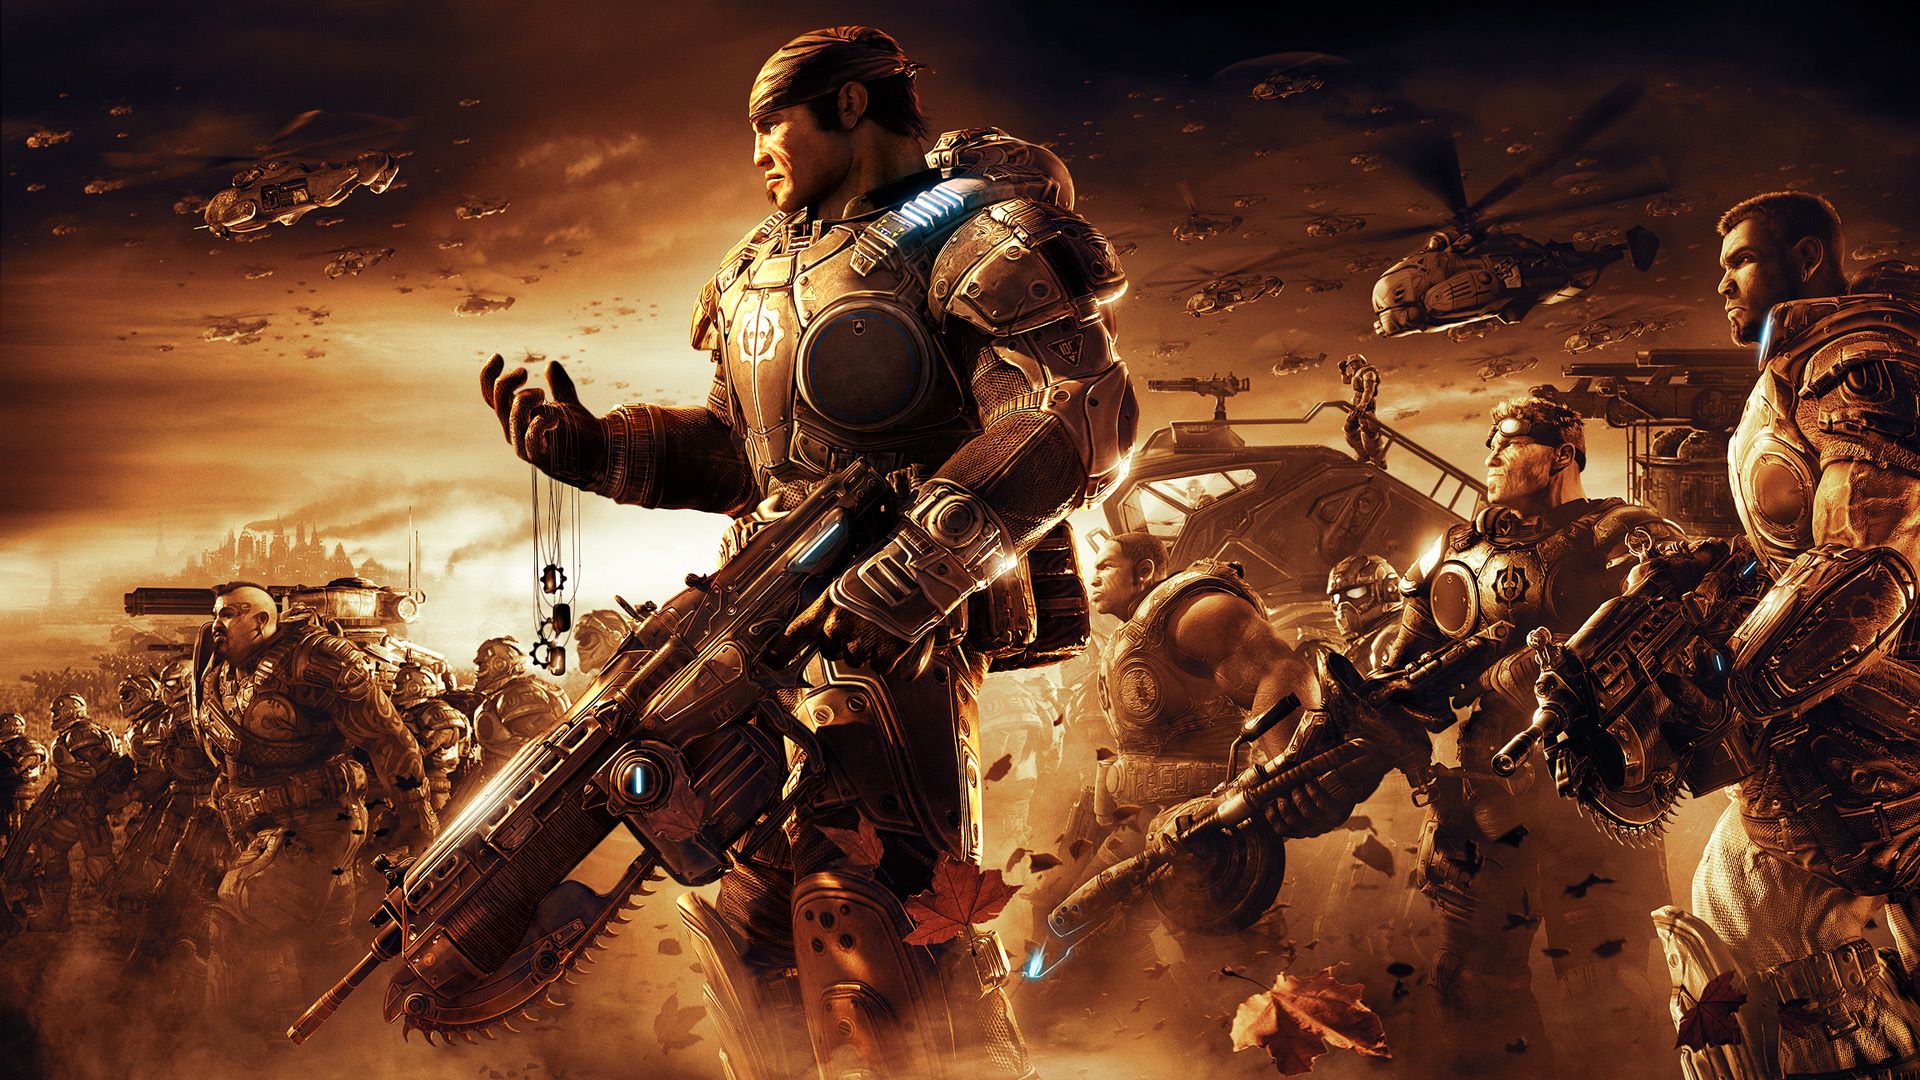 مارکوس فنیکس مشغول نبرد در بازی Gears of War 2